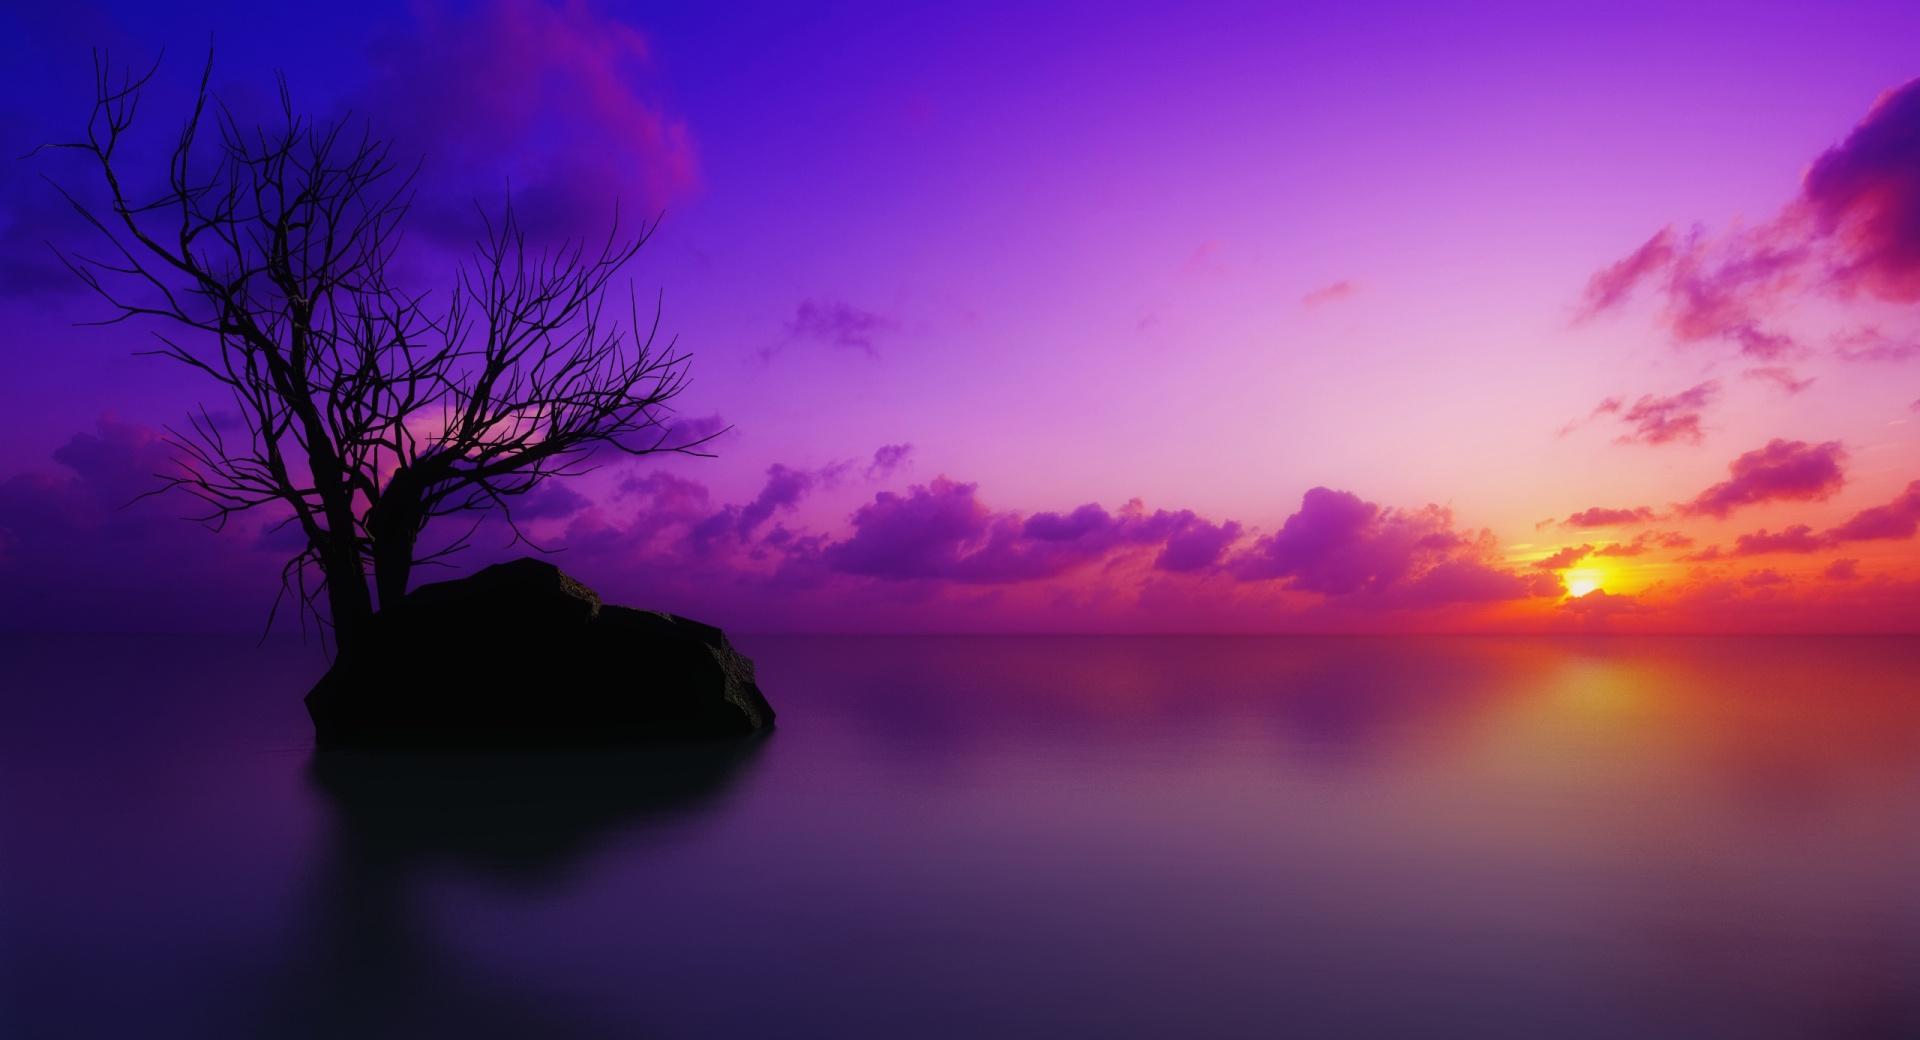 Maldivian Sunset at 1280 x 960 size wallpapers HD quality